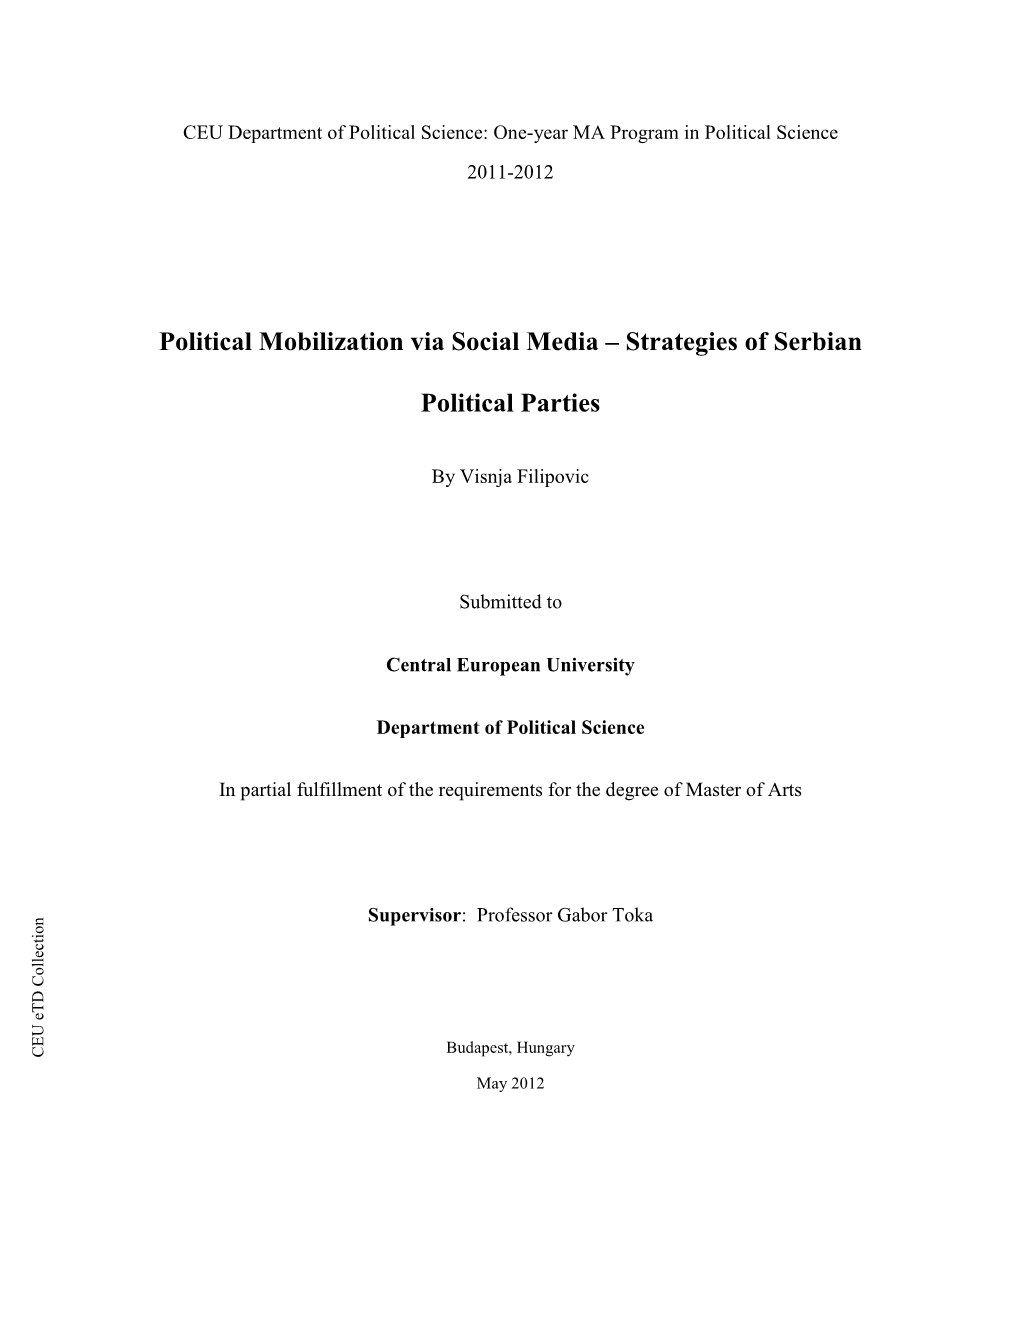 Strategies of Serbian Political Parties